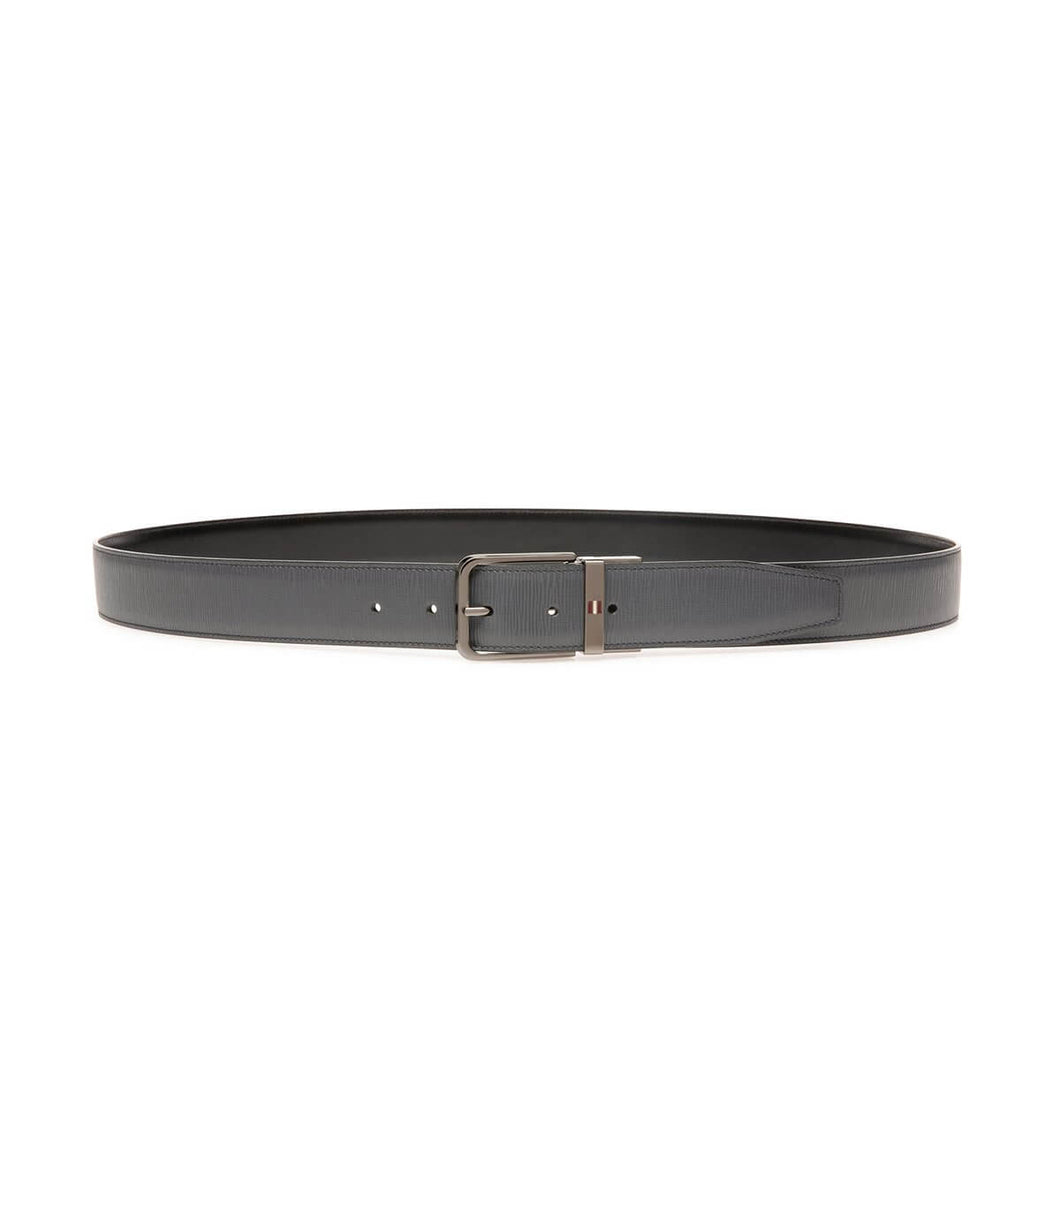 NEW Bally Arkin Men's 6232246 Grey Leather 110cm Belt MSRP $335